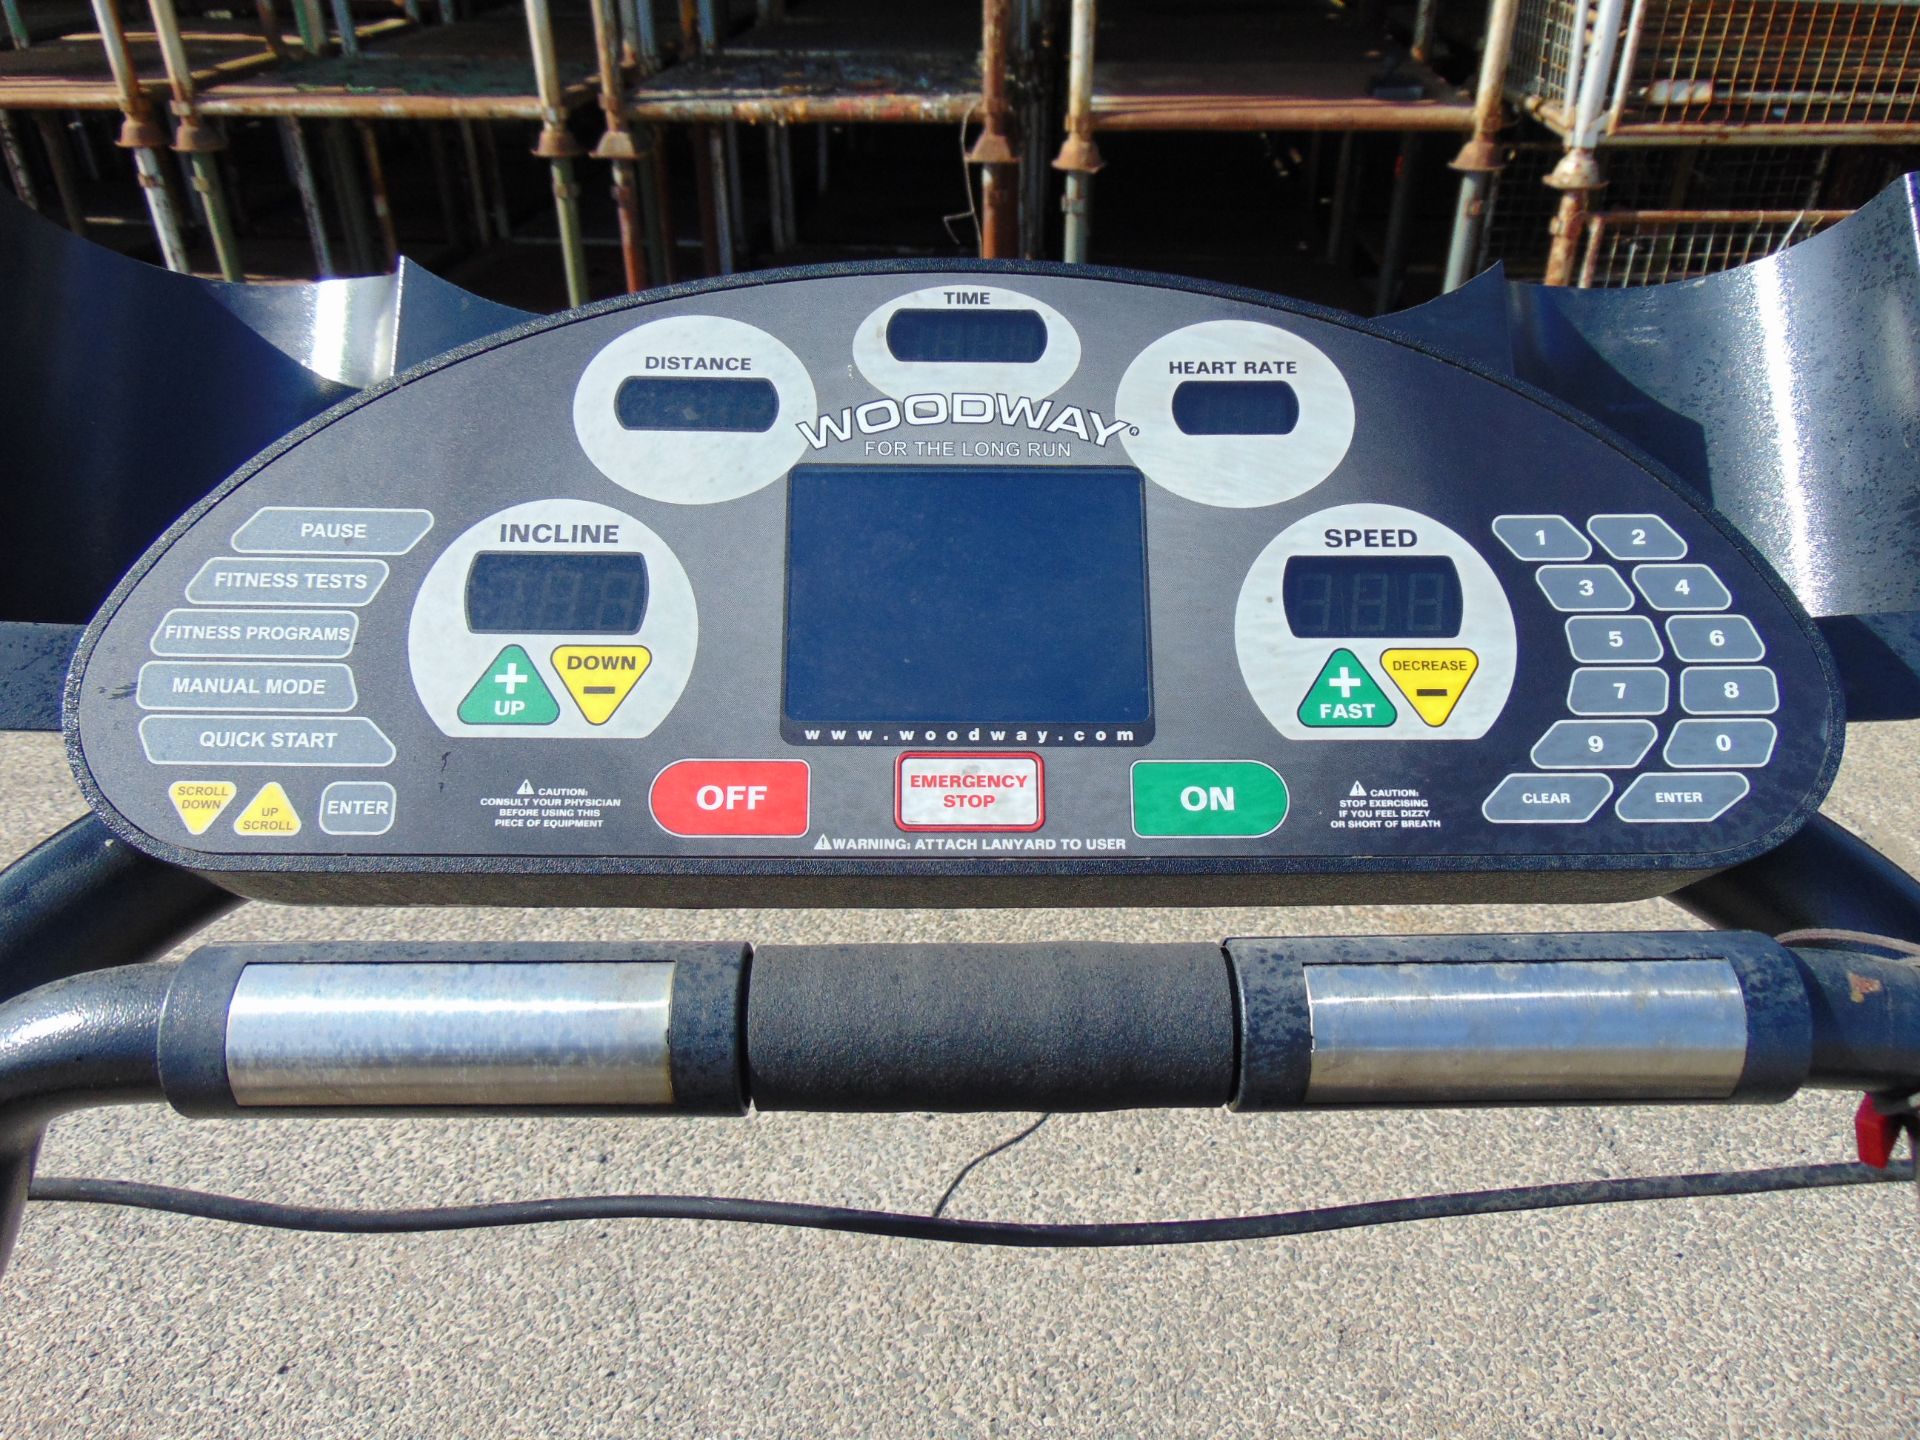 Woodway Mercury-S Treadmill - Image 4 of 7